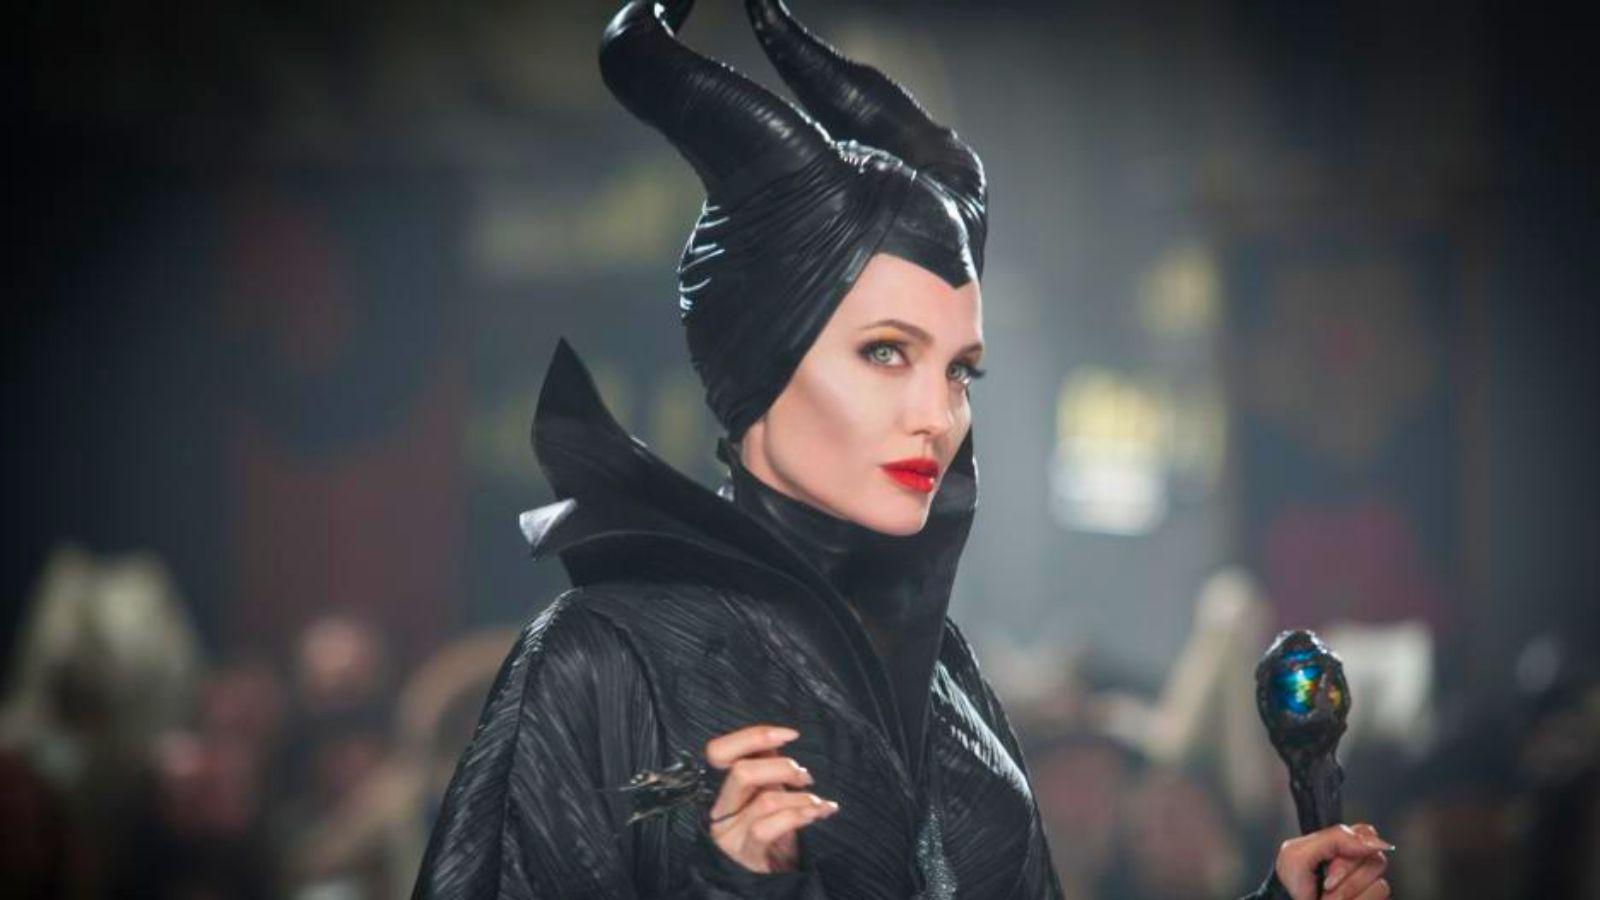 Angelina Jolie as Maleficent.